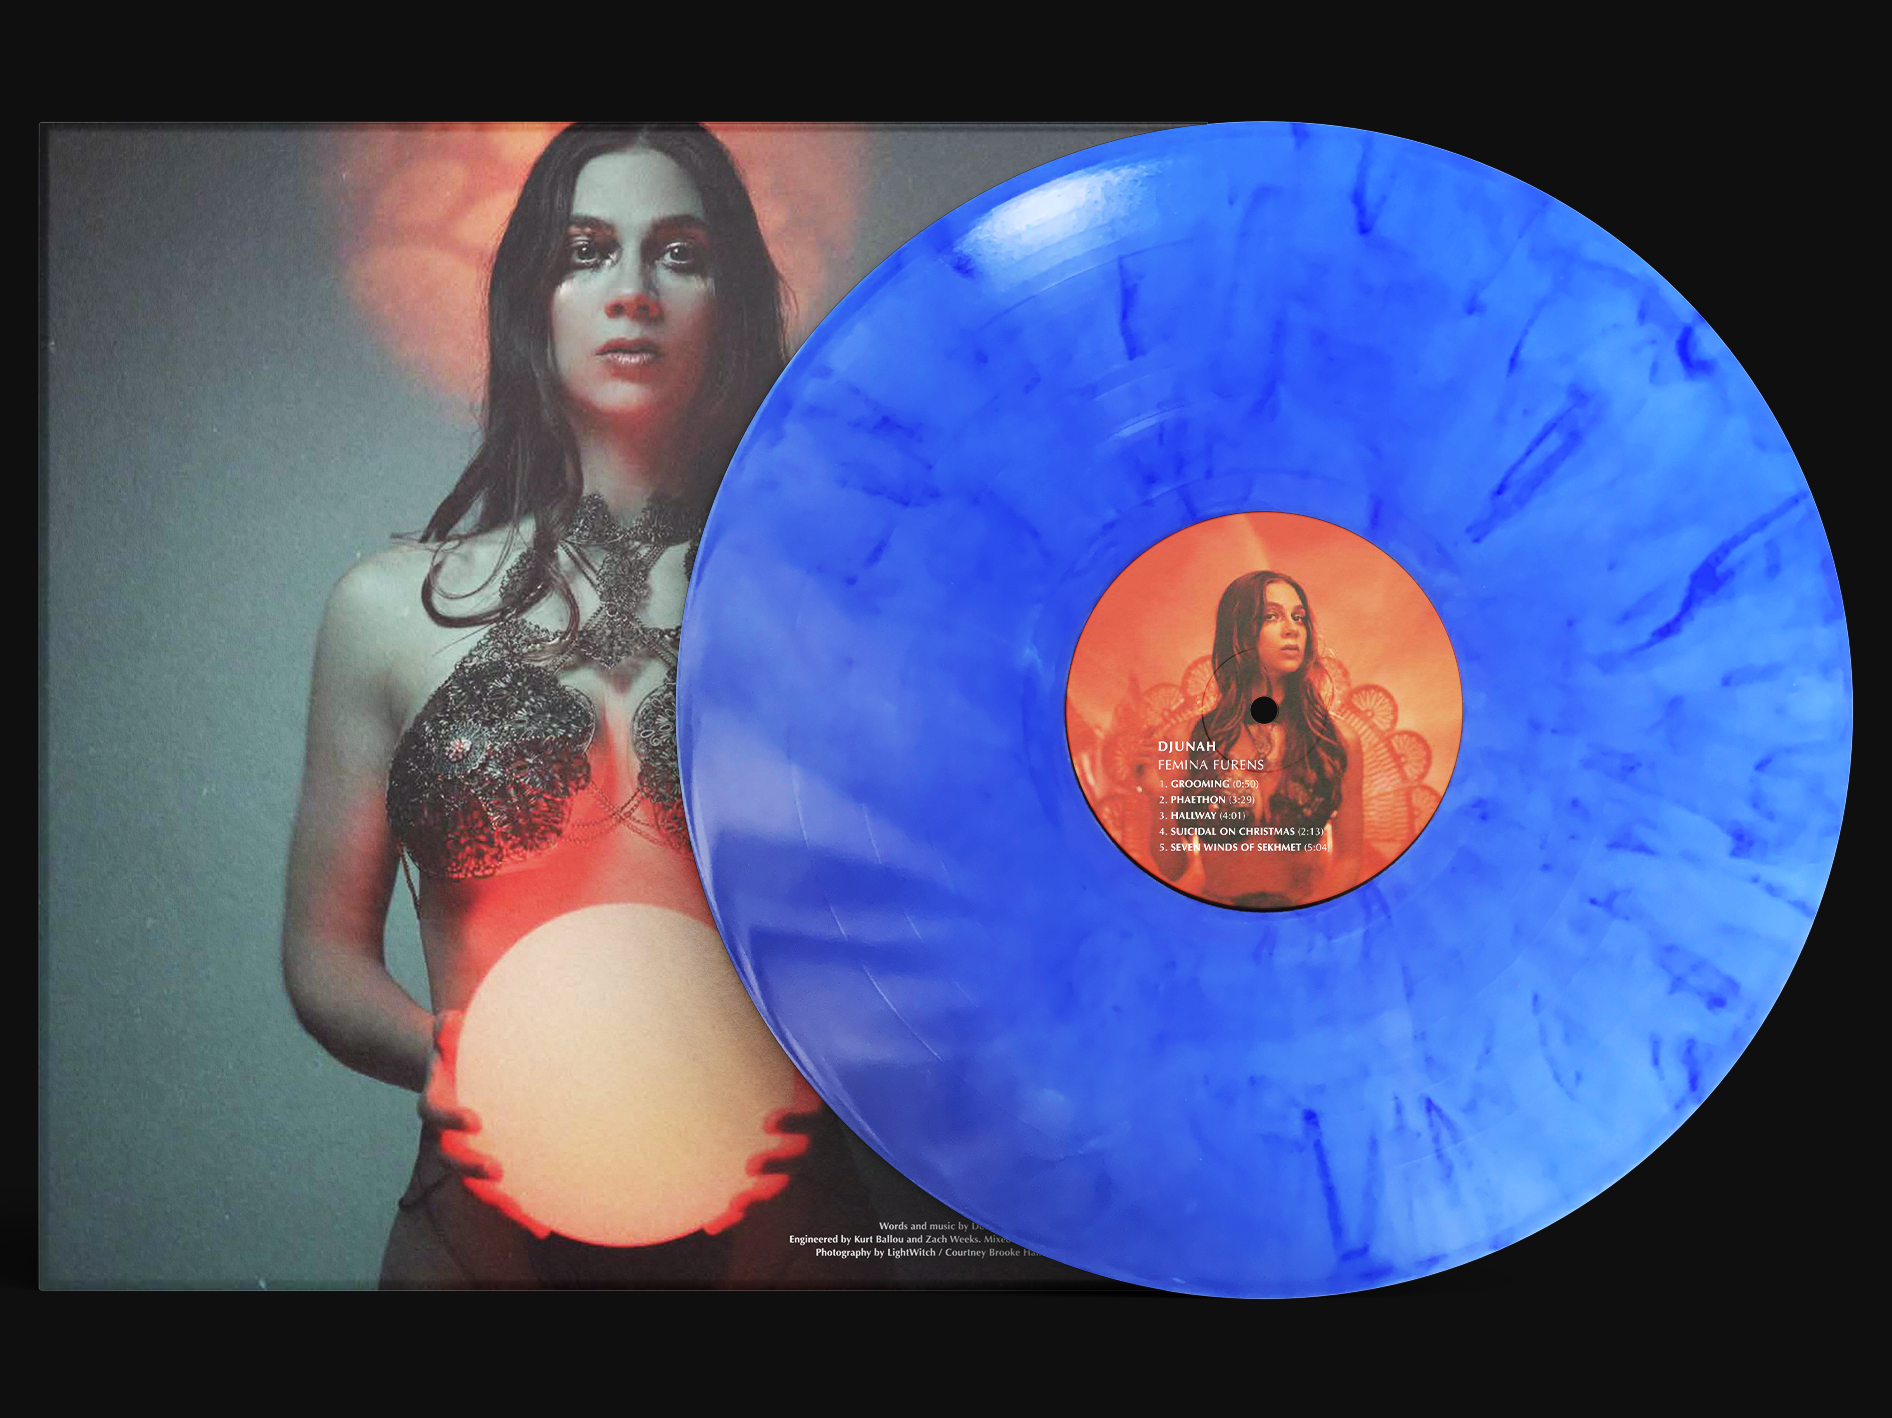 Djunah "Femina Furens" first pressing 12" vinyl LP on metallic indigo swirl, reverse cover, pressed by Smashed Plastic in Chicago, Illinois